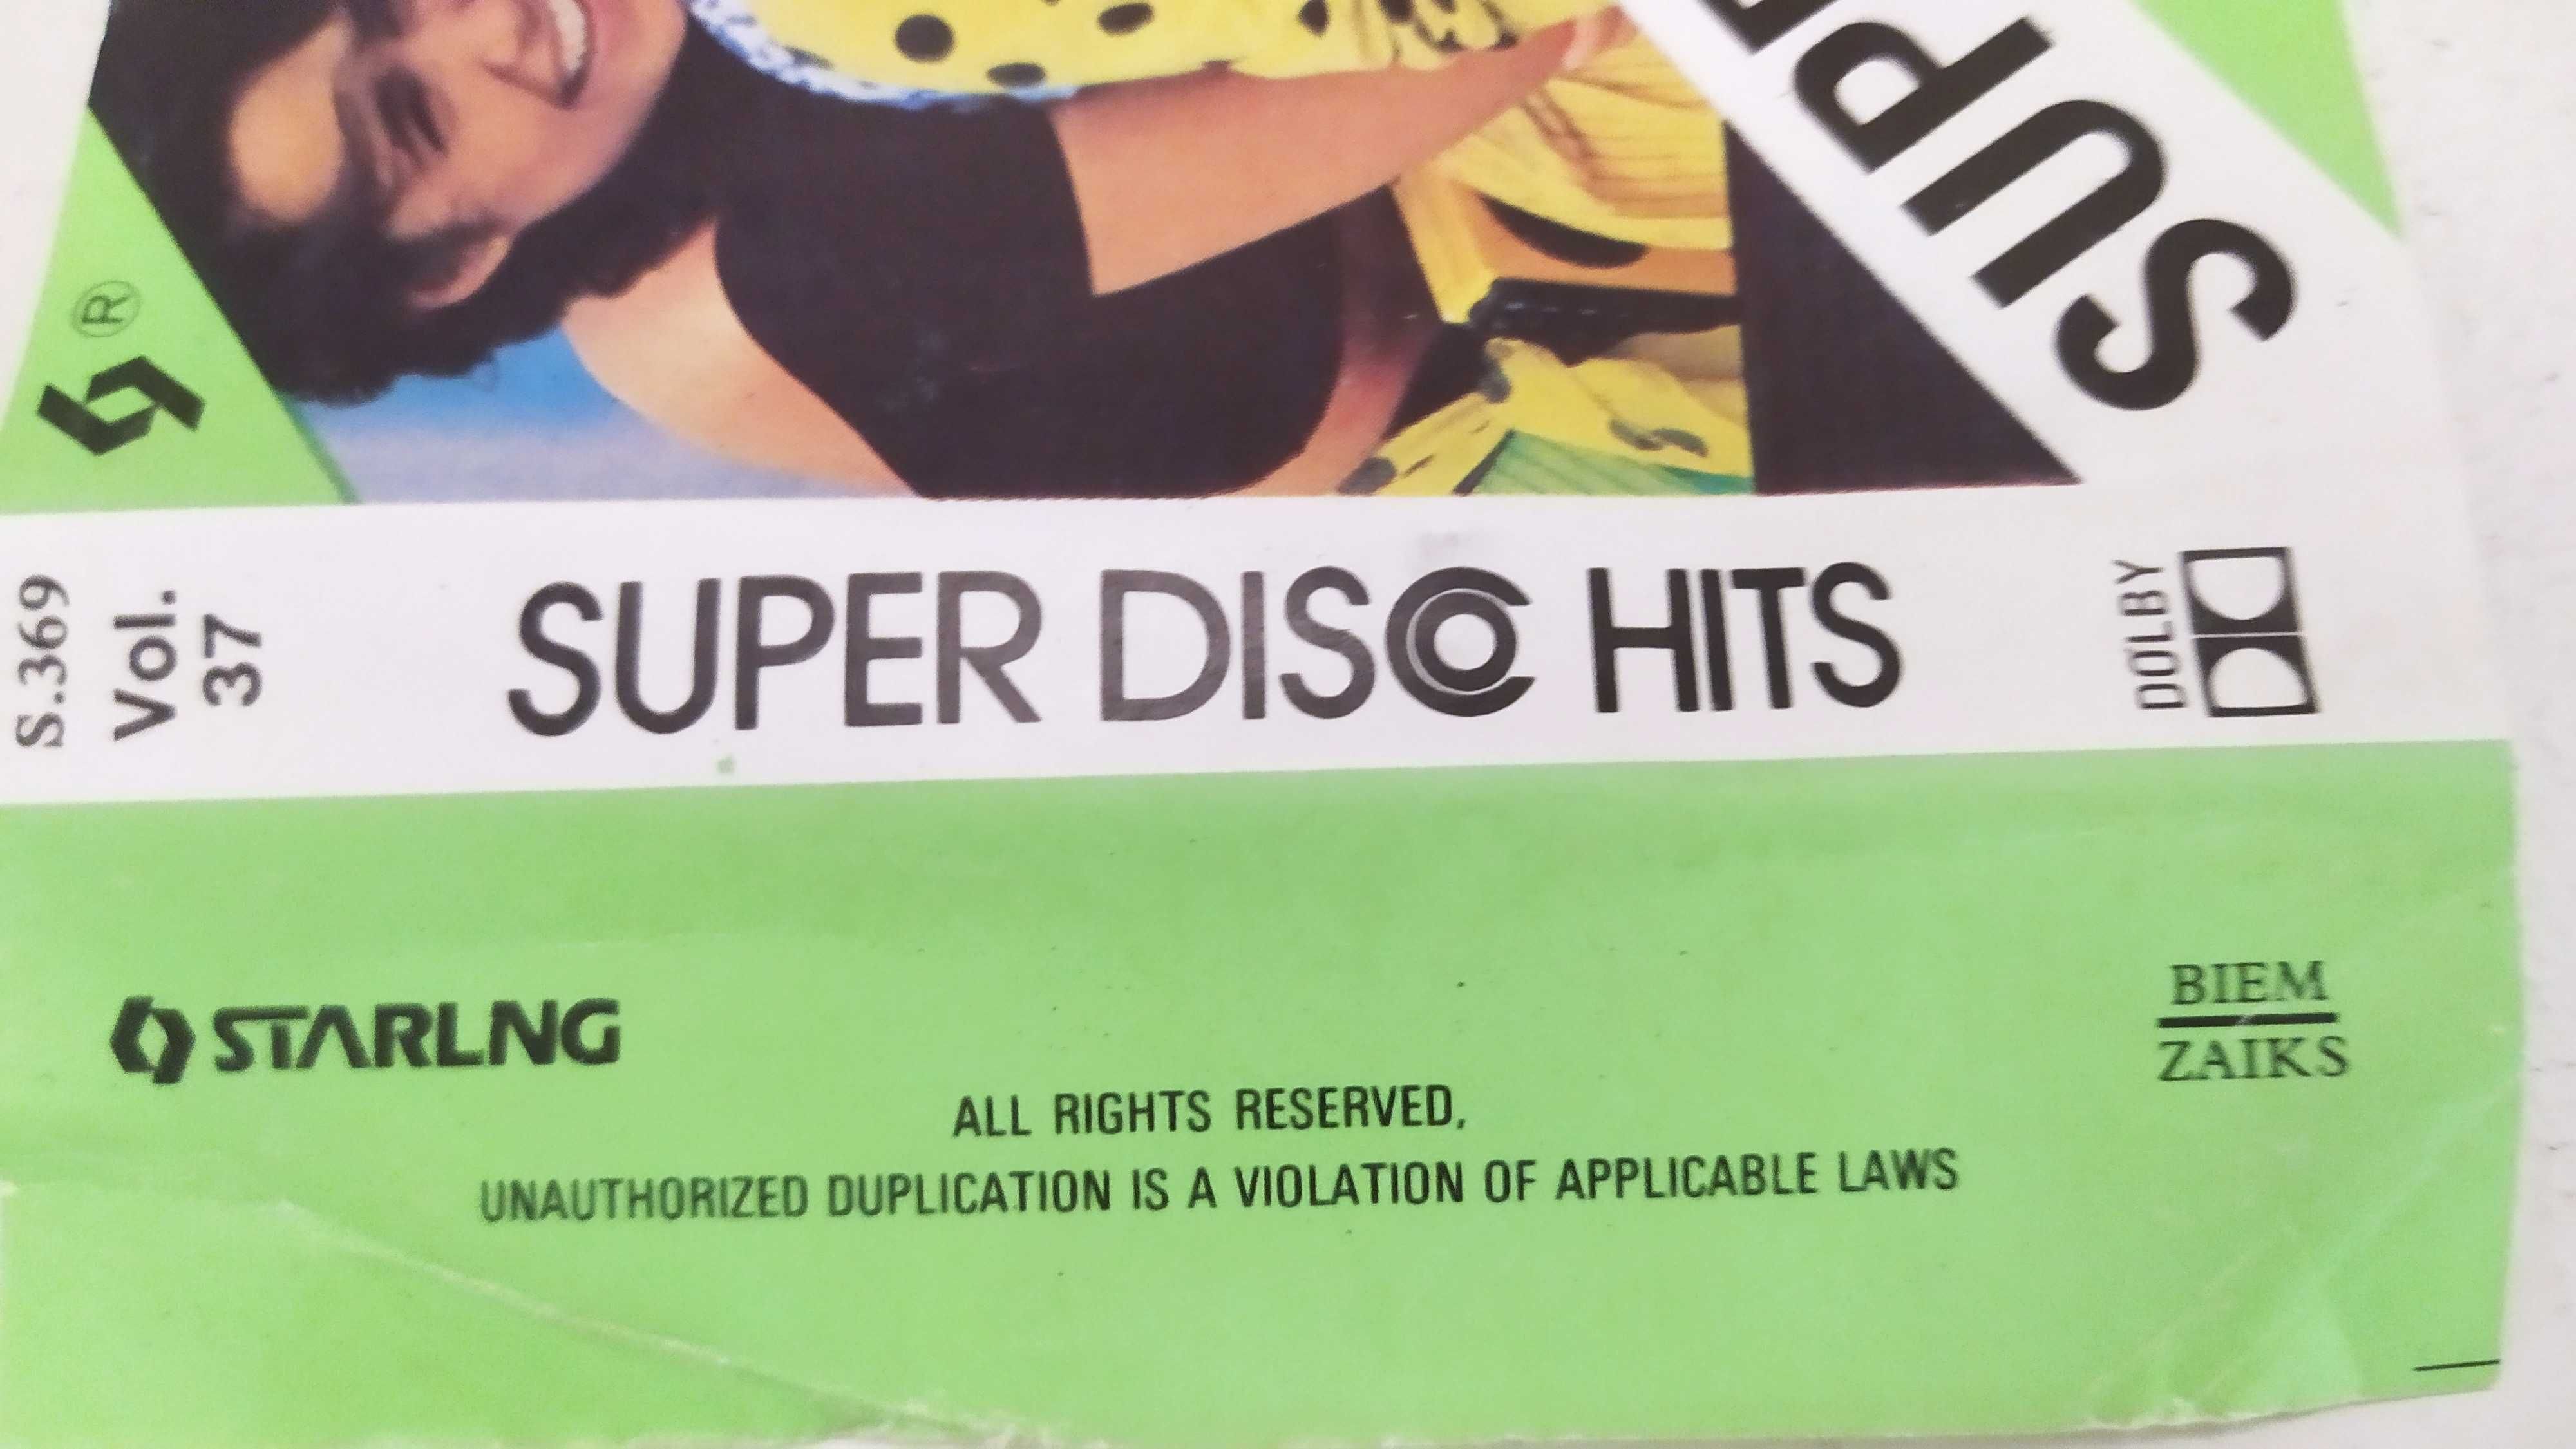 Super Disco Hits 37 Starling kaseta